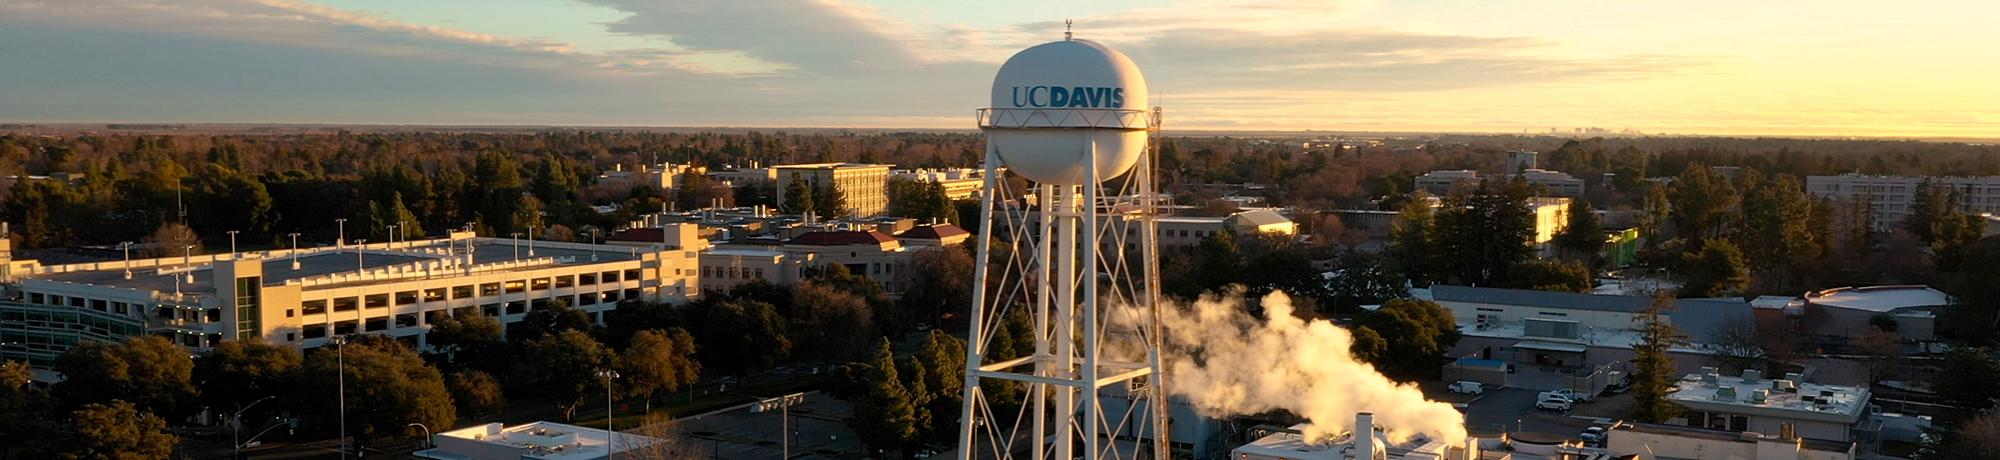 Aerial image of UC Davis water tower.